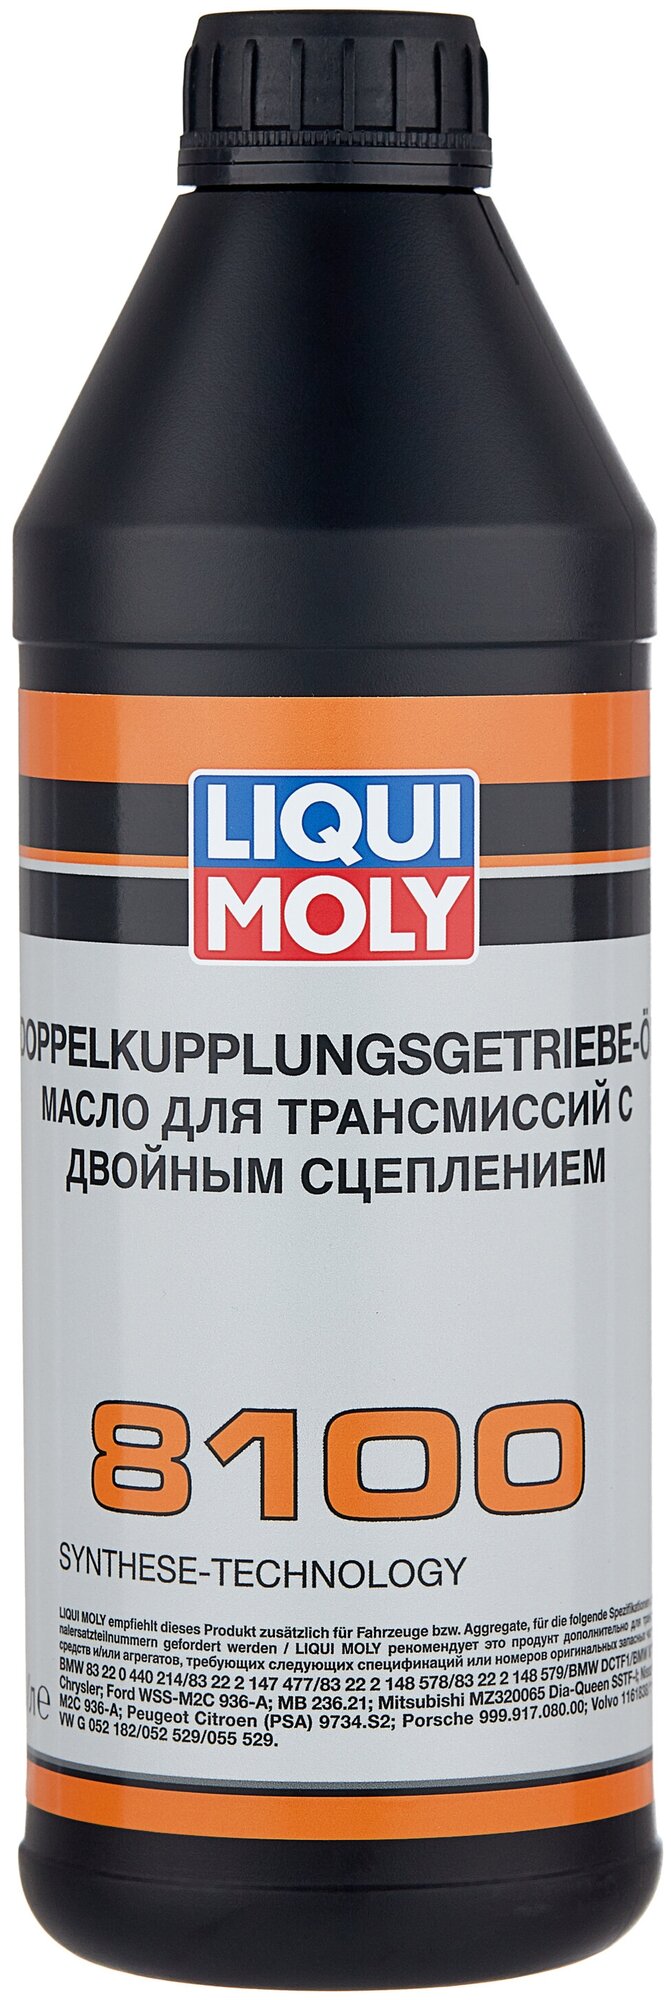 Liqui moly dsg doppelkupplungsgetriebe-oil 8100 / трансмиссионное масло 1л (3640)